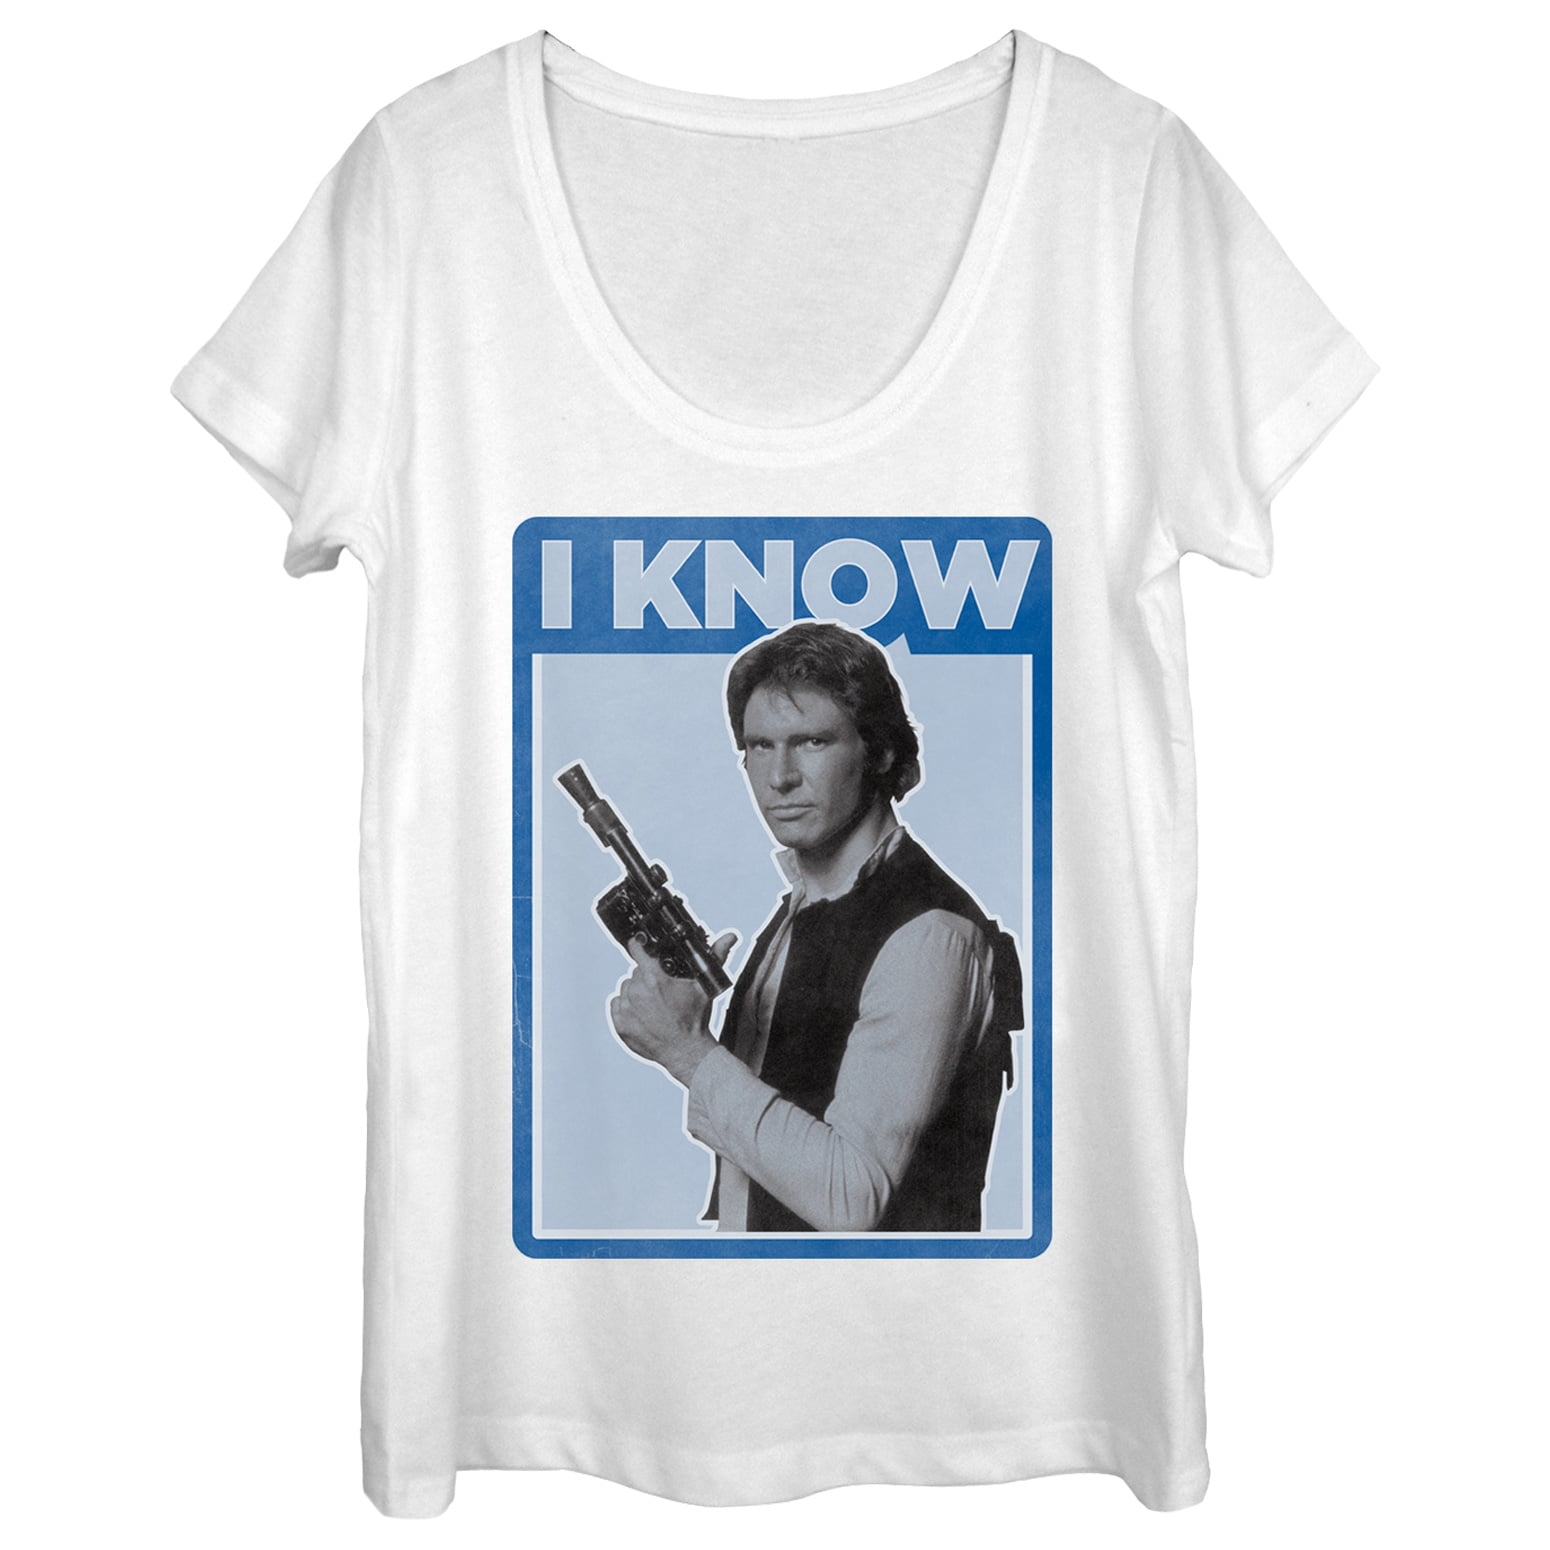 Star Wars Womens Rebel 77 Scoop Neck T-Shirt